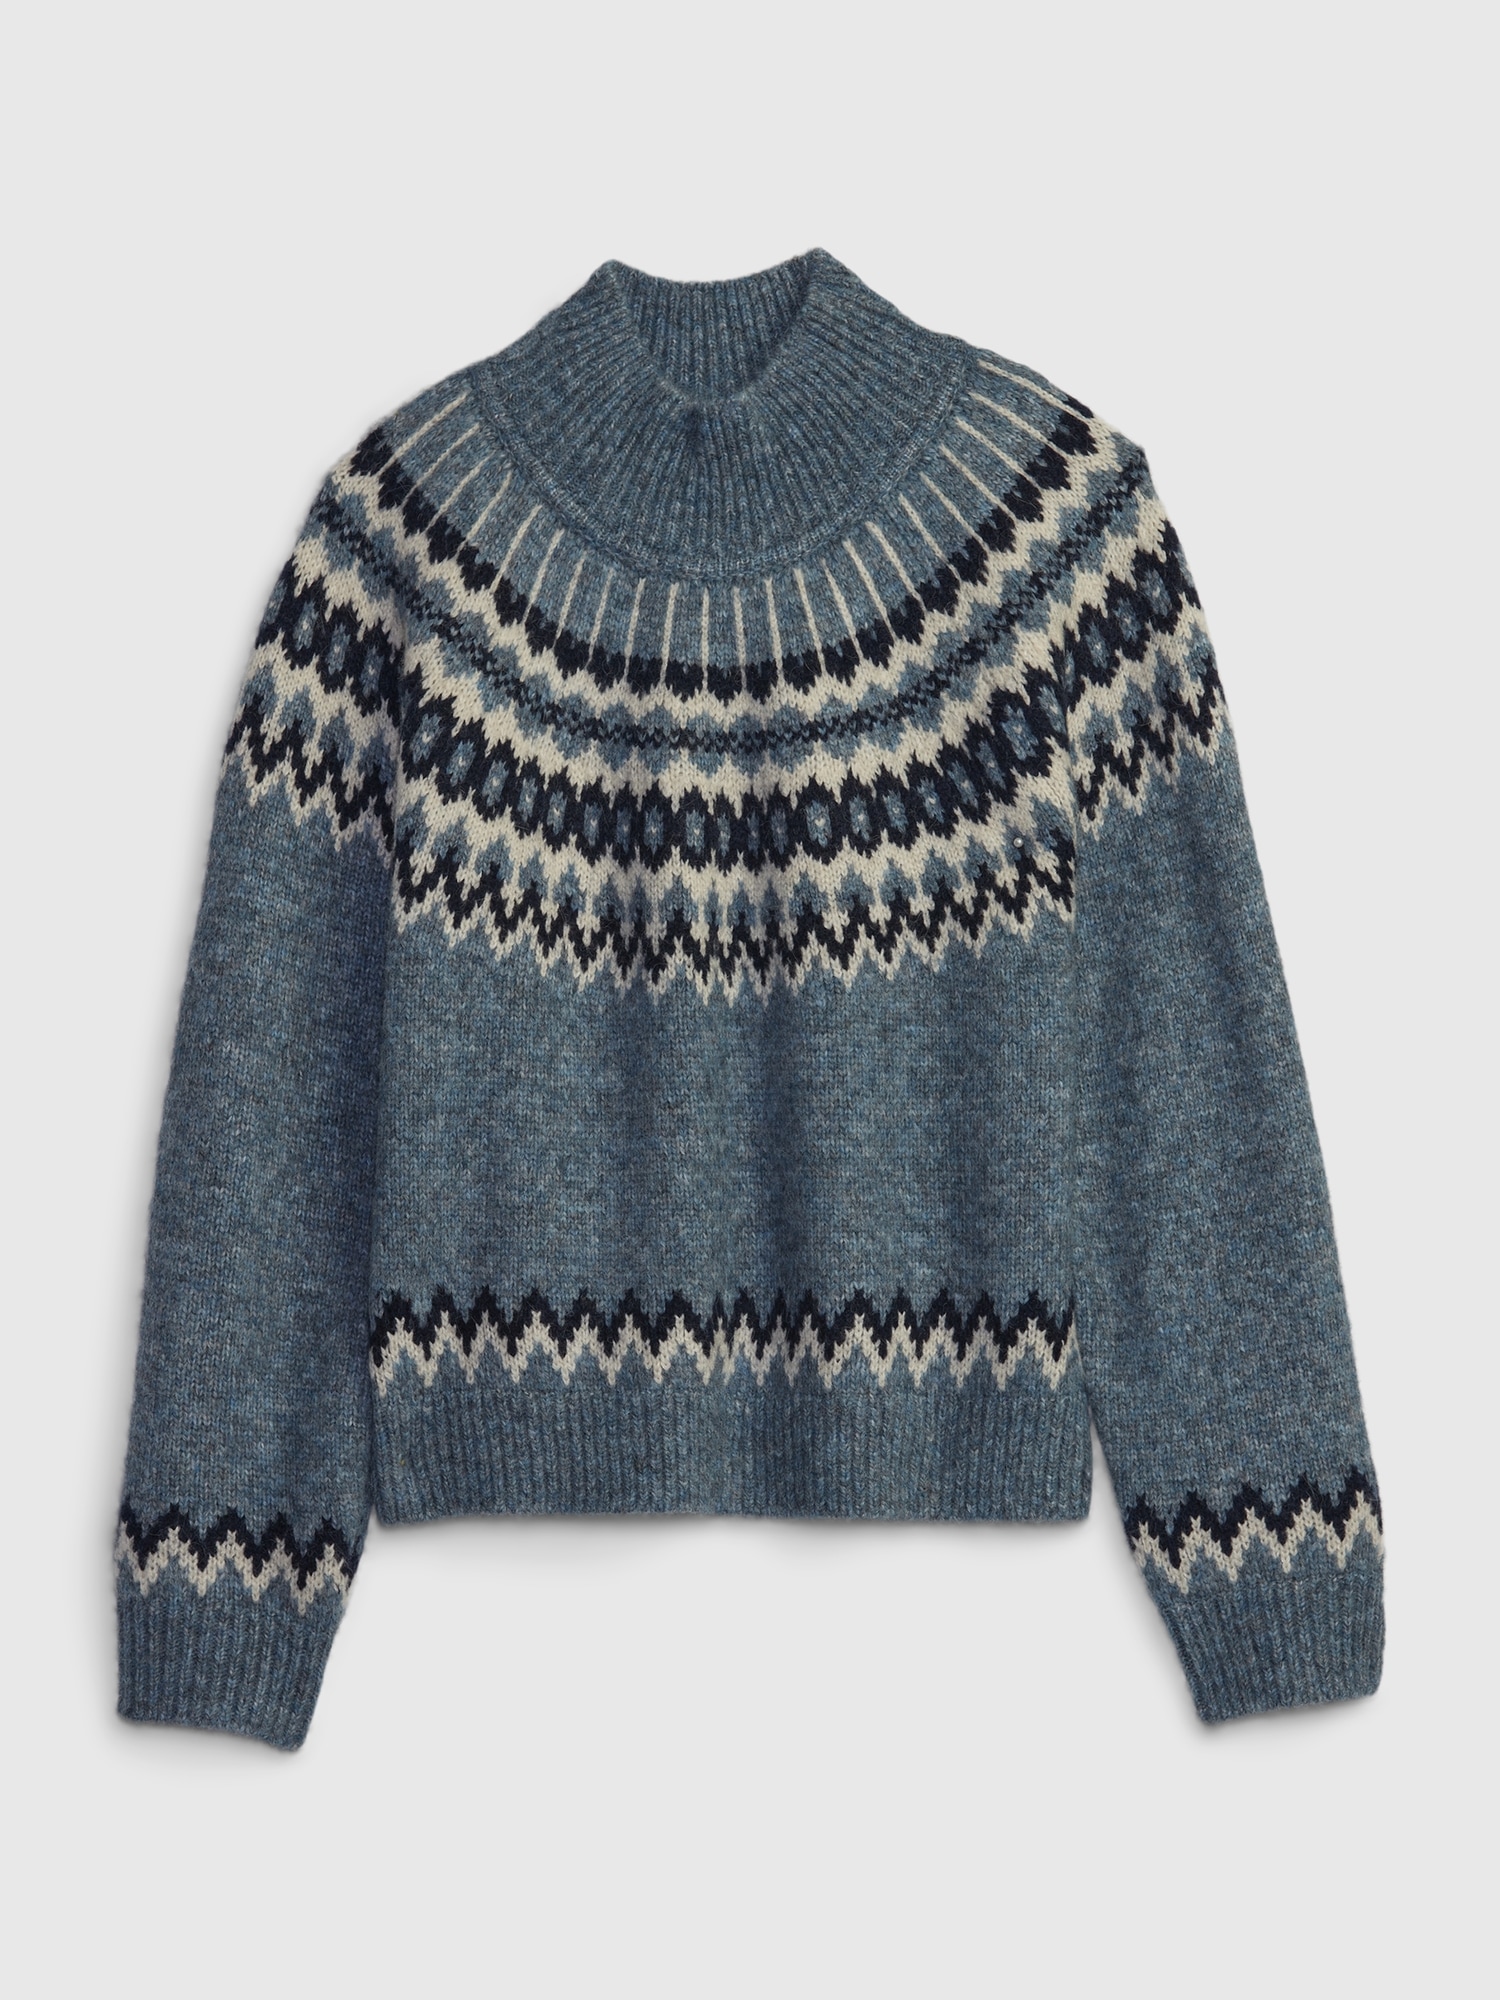 Fair Isle wool sweater, Twik